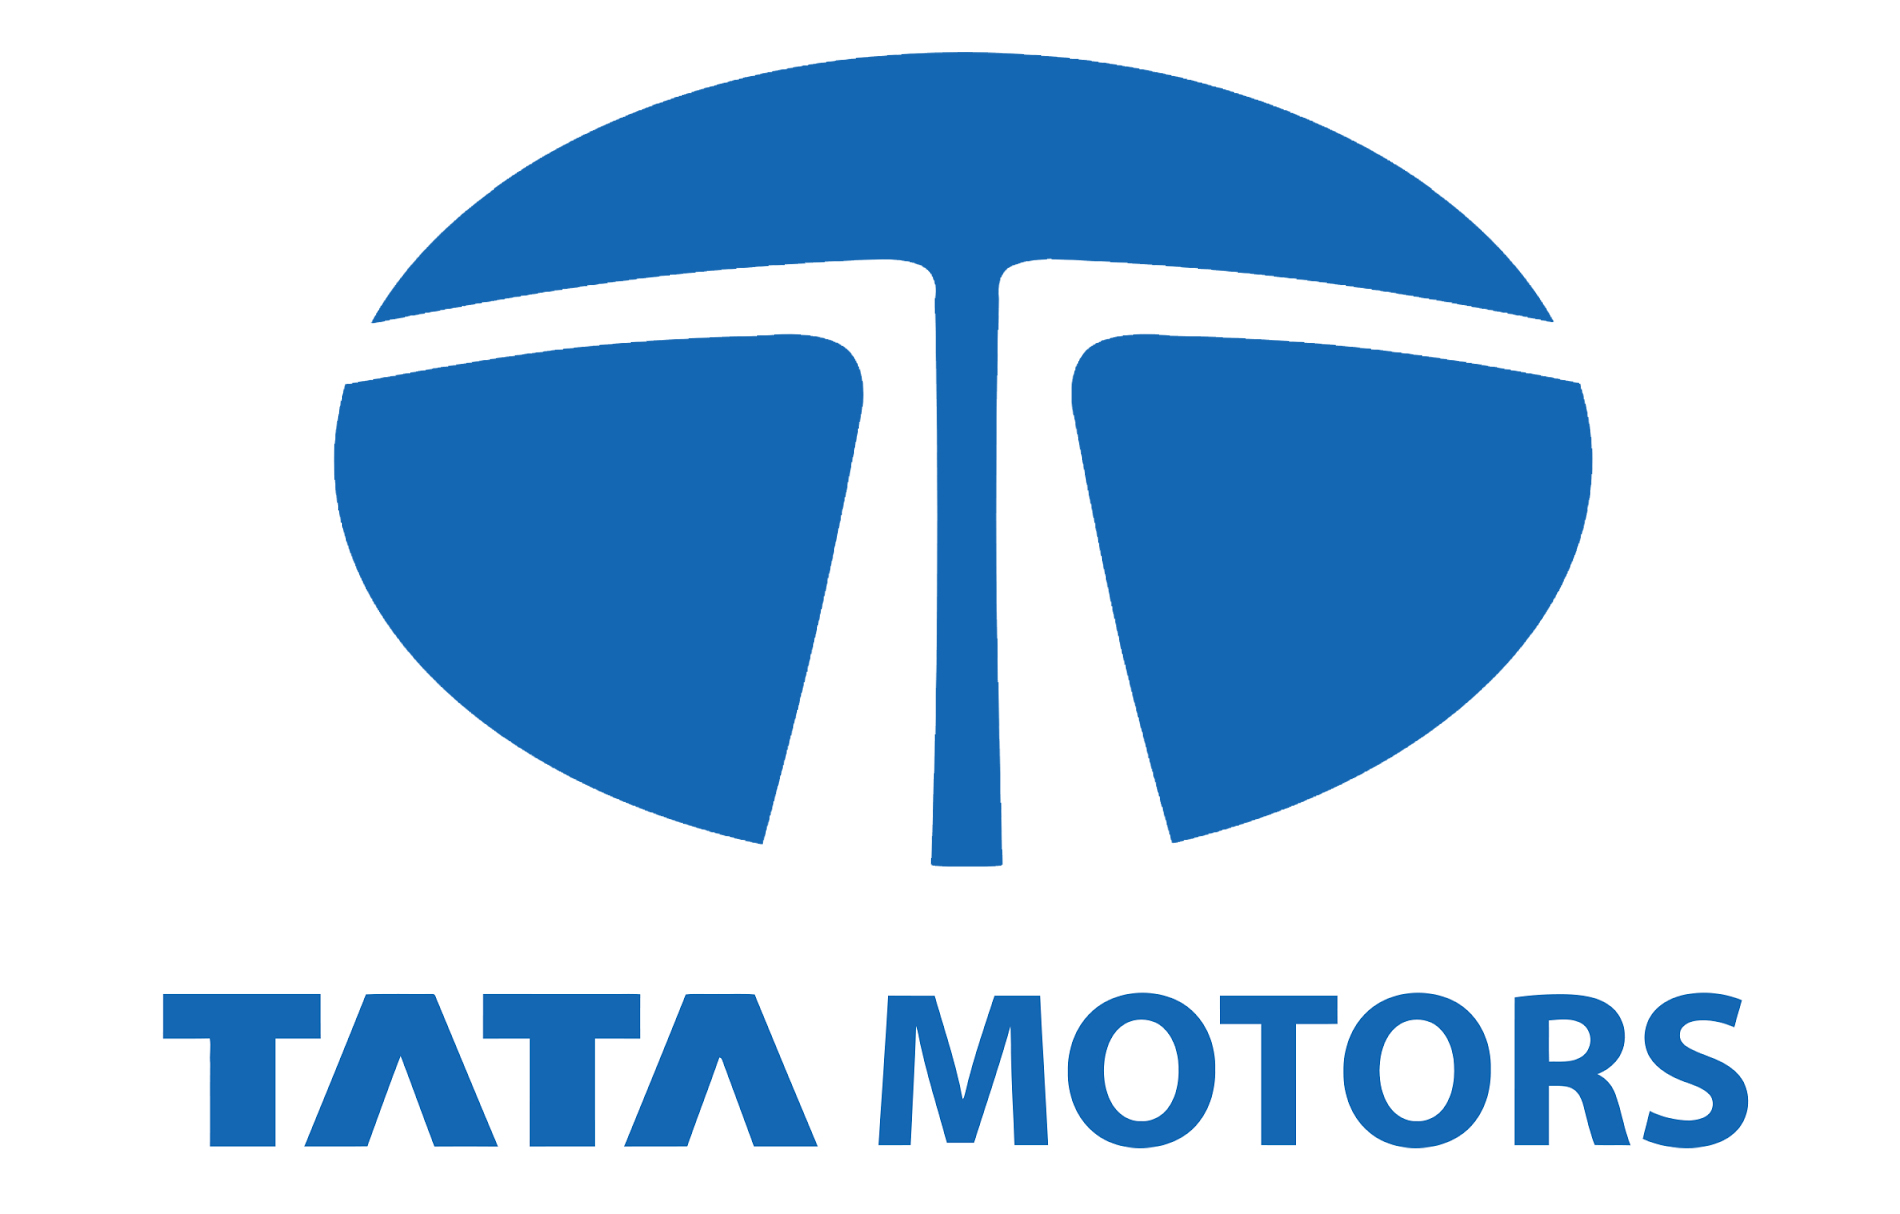 Tata Motors Cars Showroom - Seth And Sons Logo